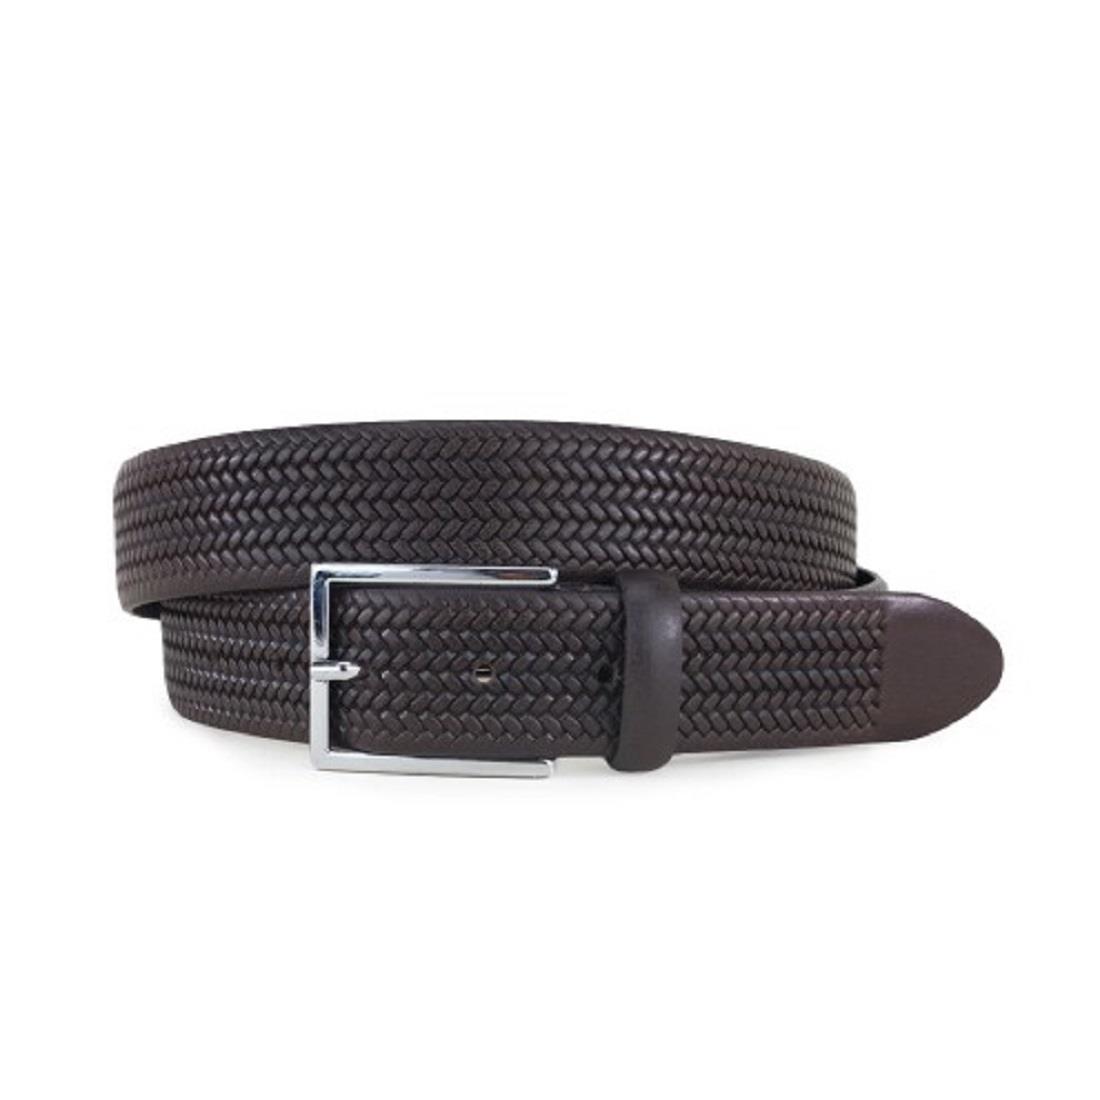 Braided belt in brown leather - PIEROTUCCI